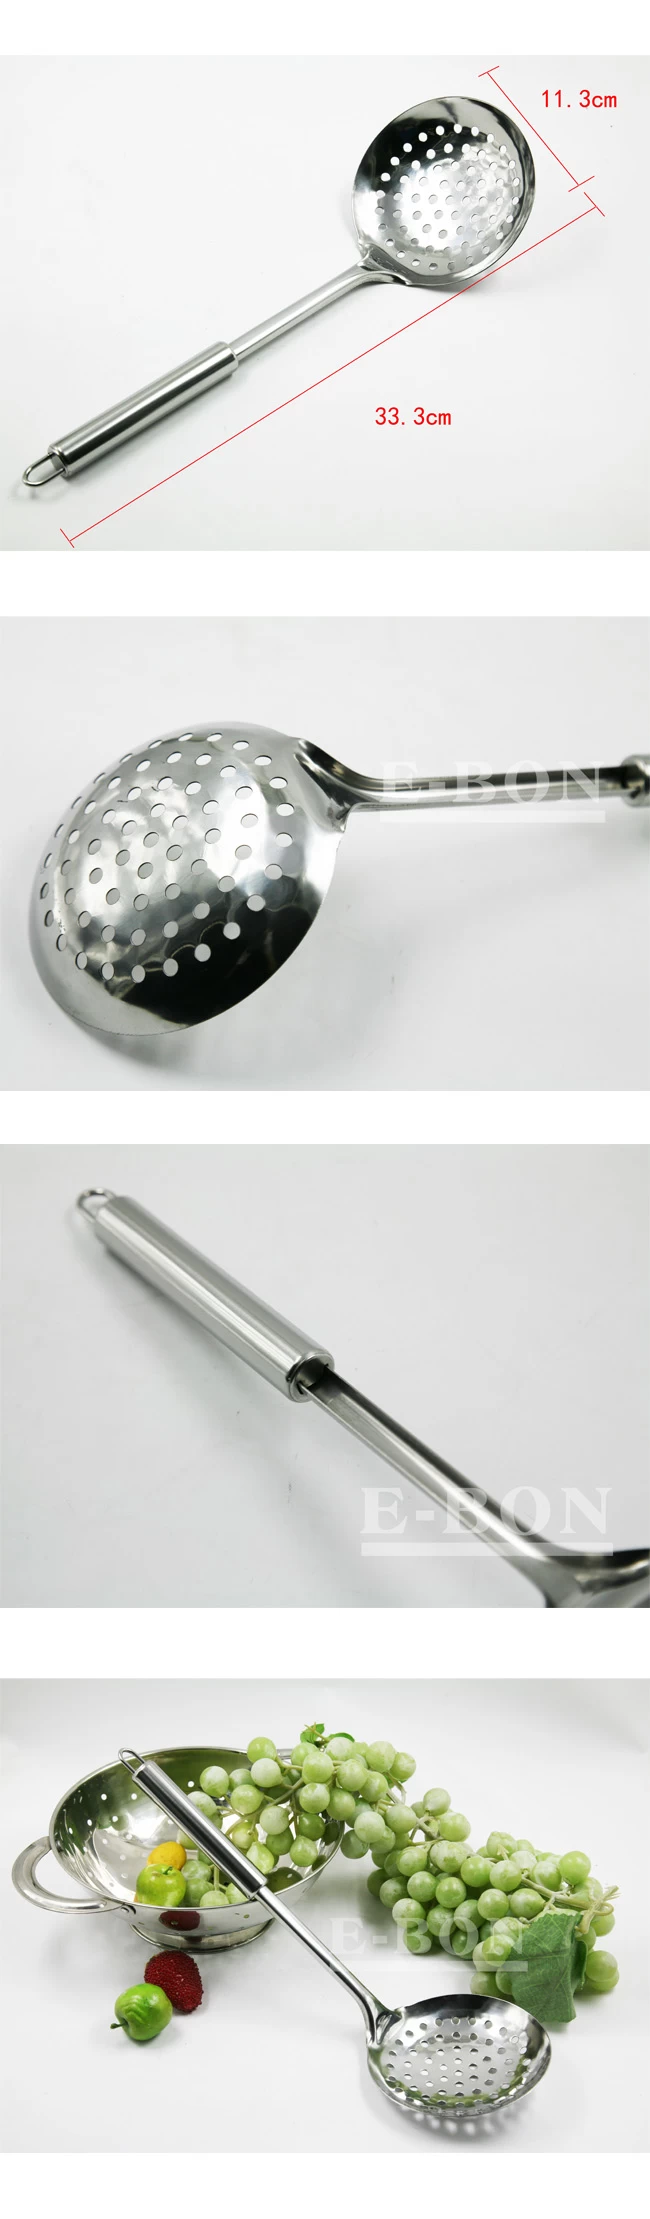 Stainless steel colander spoon